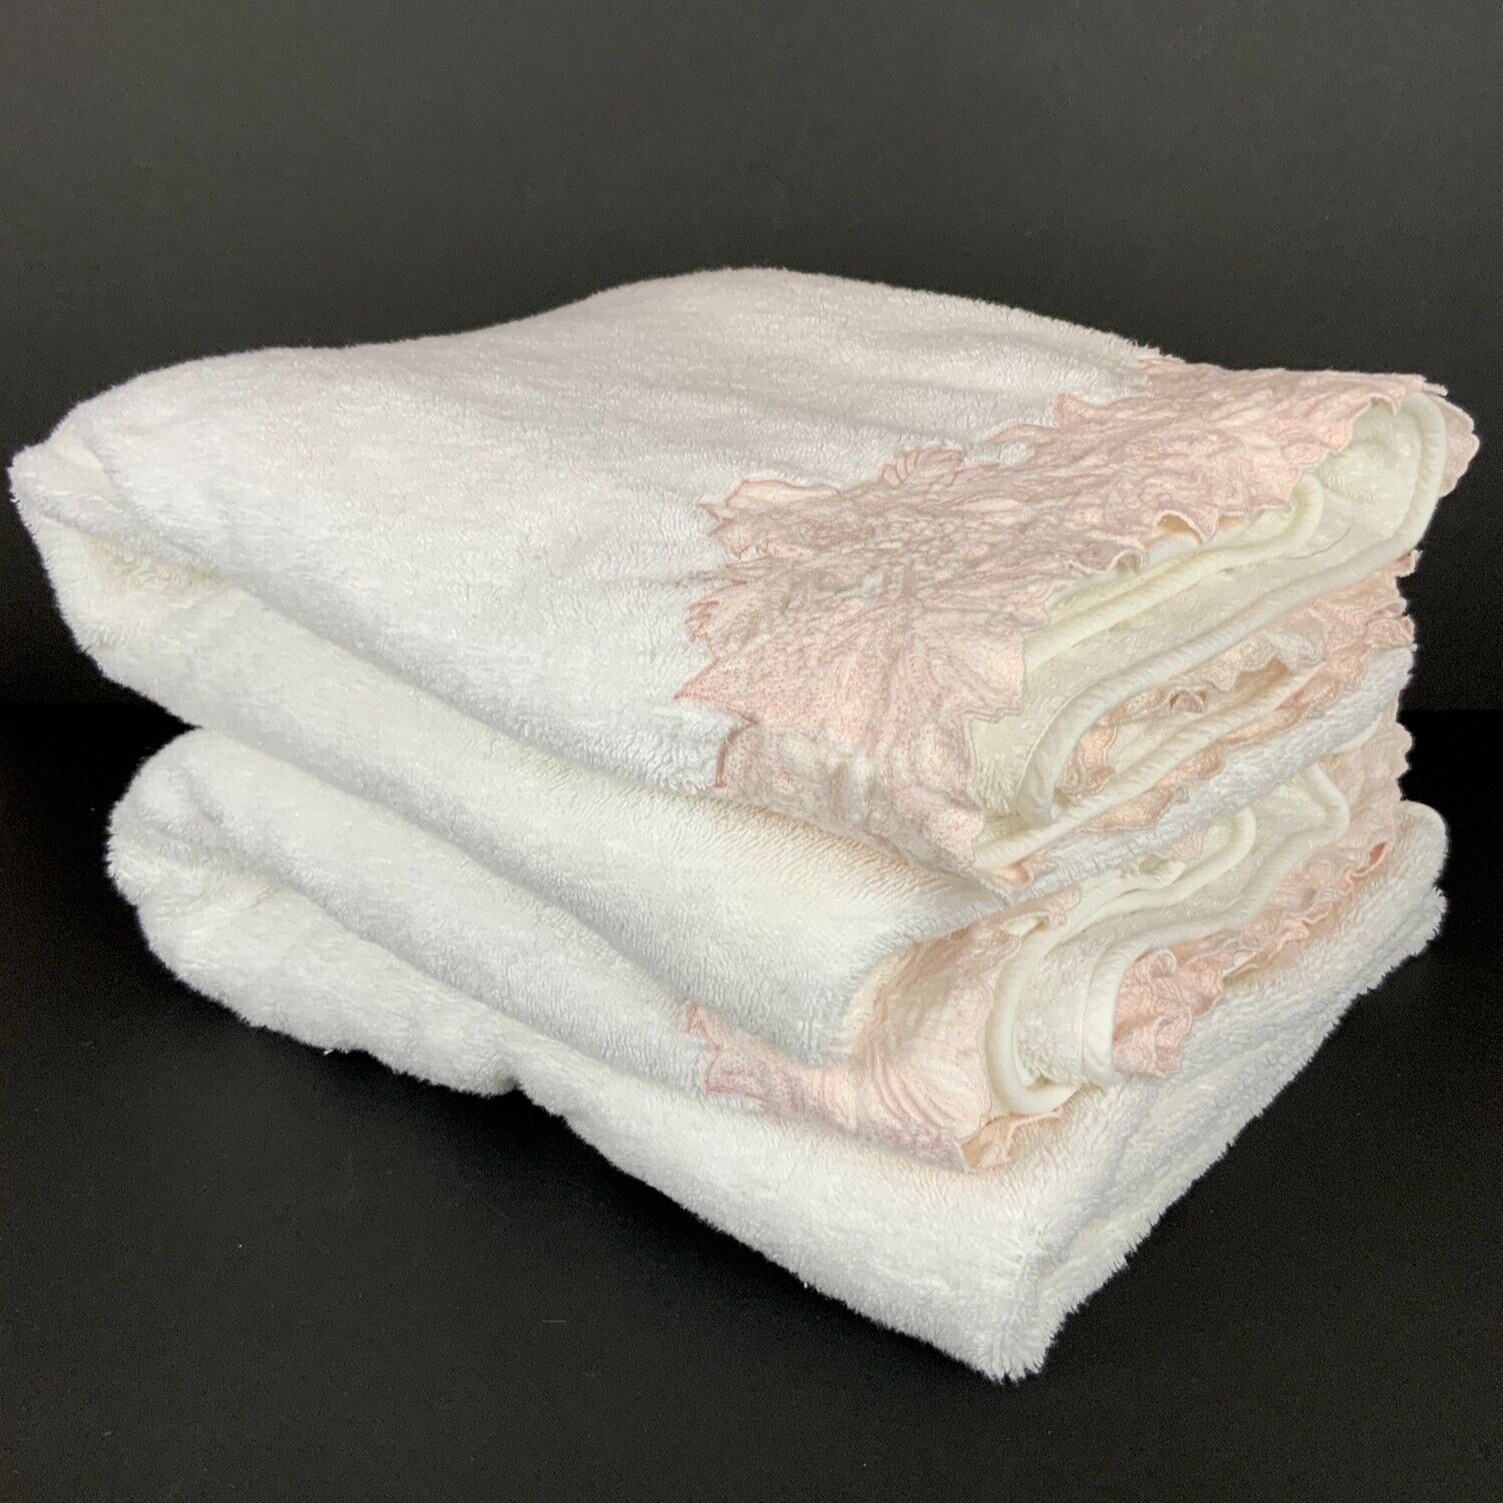 D Porthault France Lace Trimmed Bath Sheets Towels Set of 2 Pink White Luxury